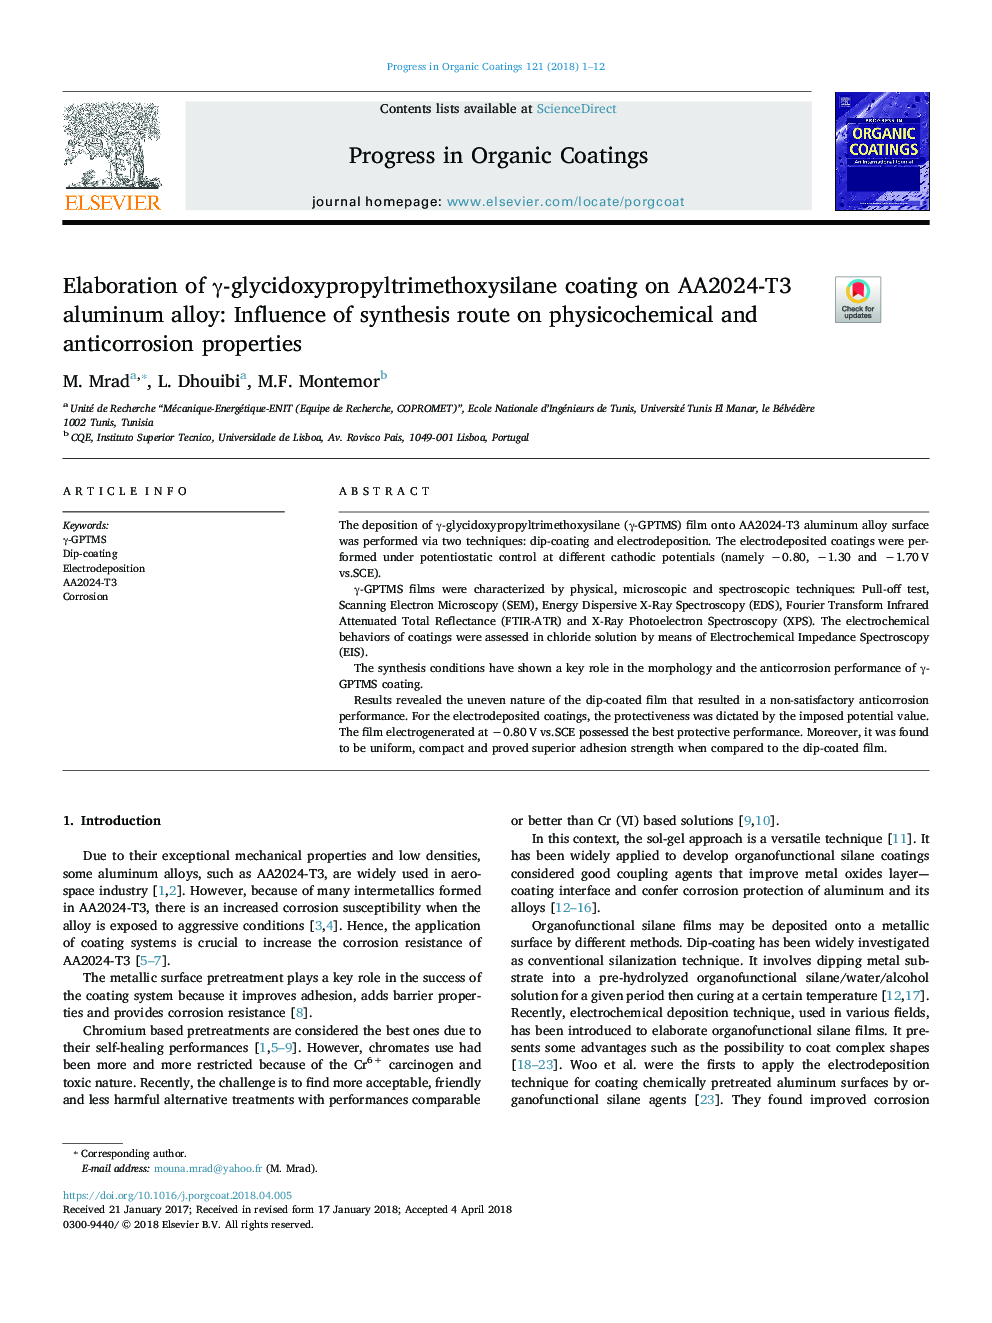 Elaboration of Î³-glycidoxypropyltrimethoxysilane coating on AA2024-T3 aluminum alloy: Influence of synthesis route on physicochemical and anticorrosion properties